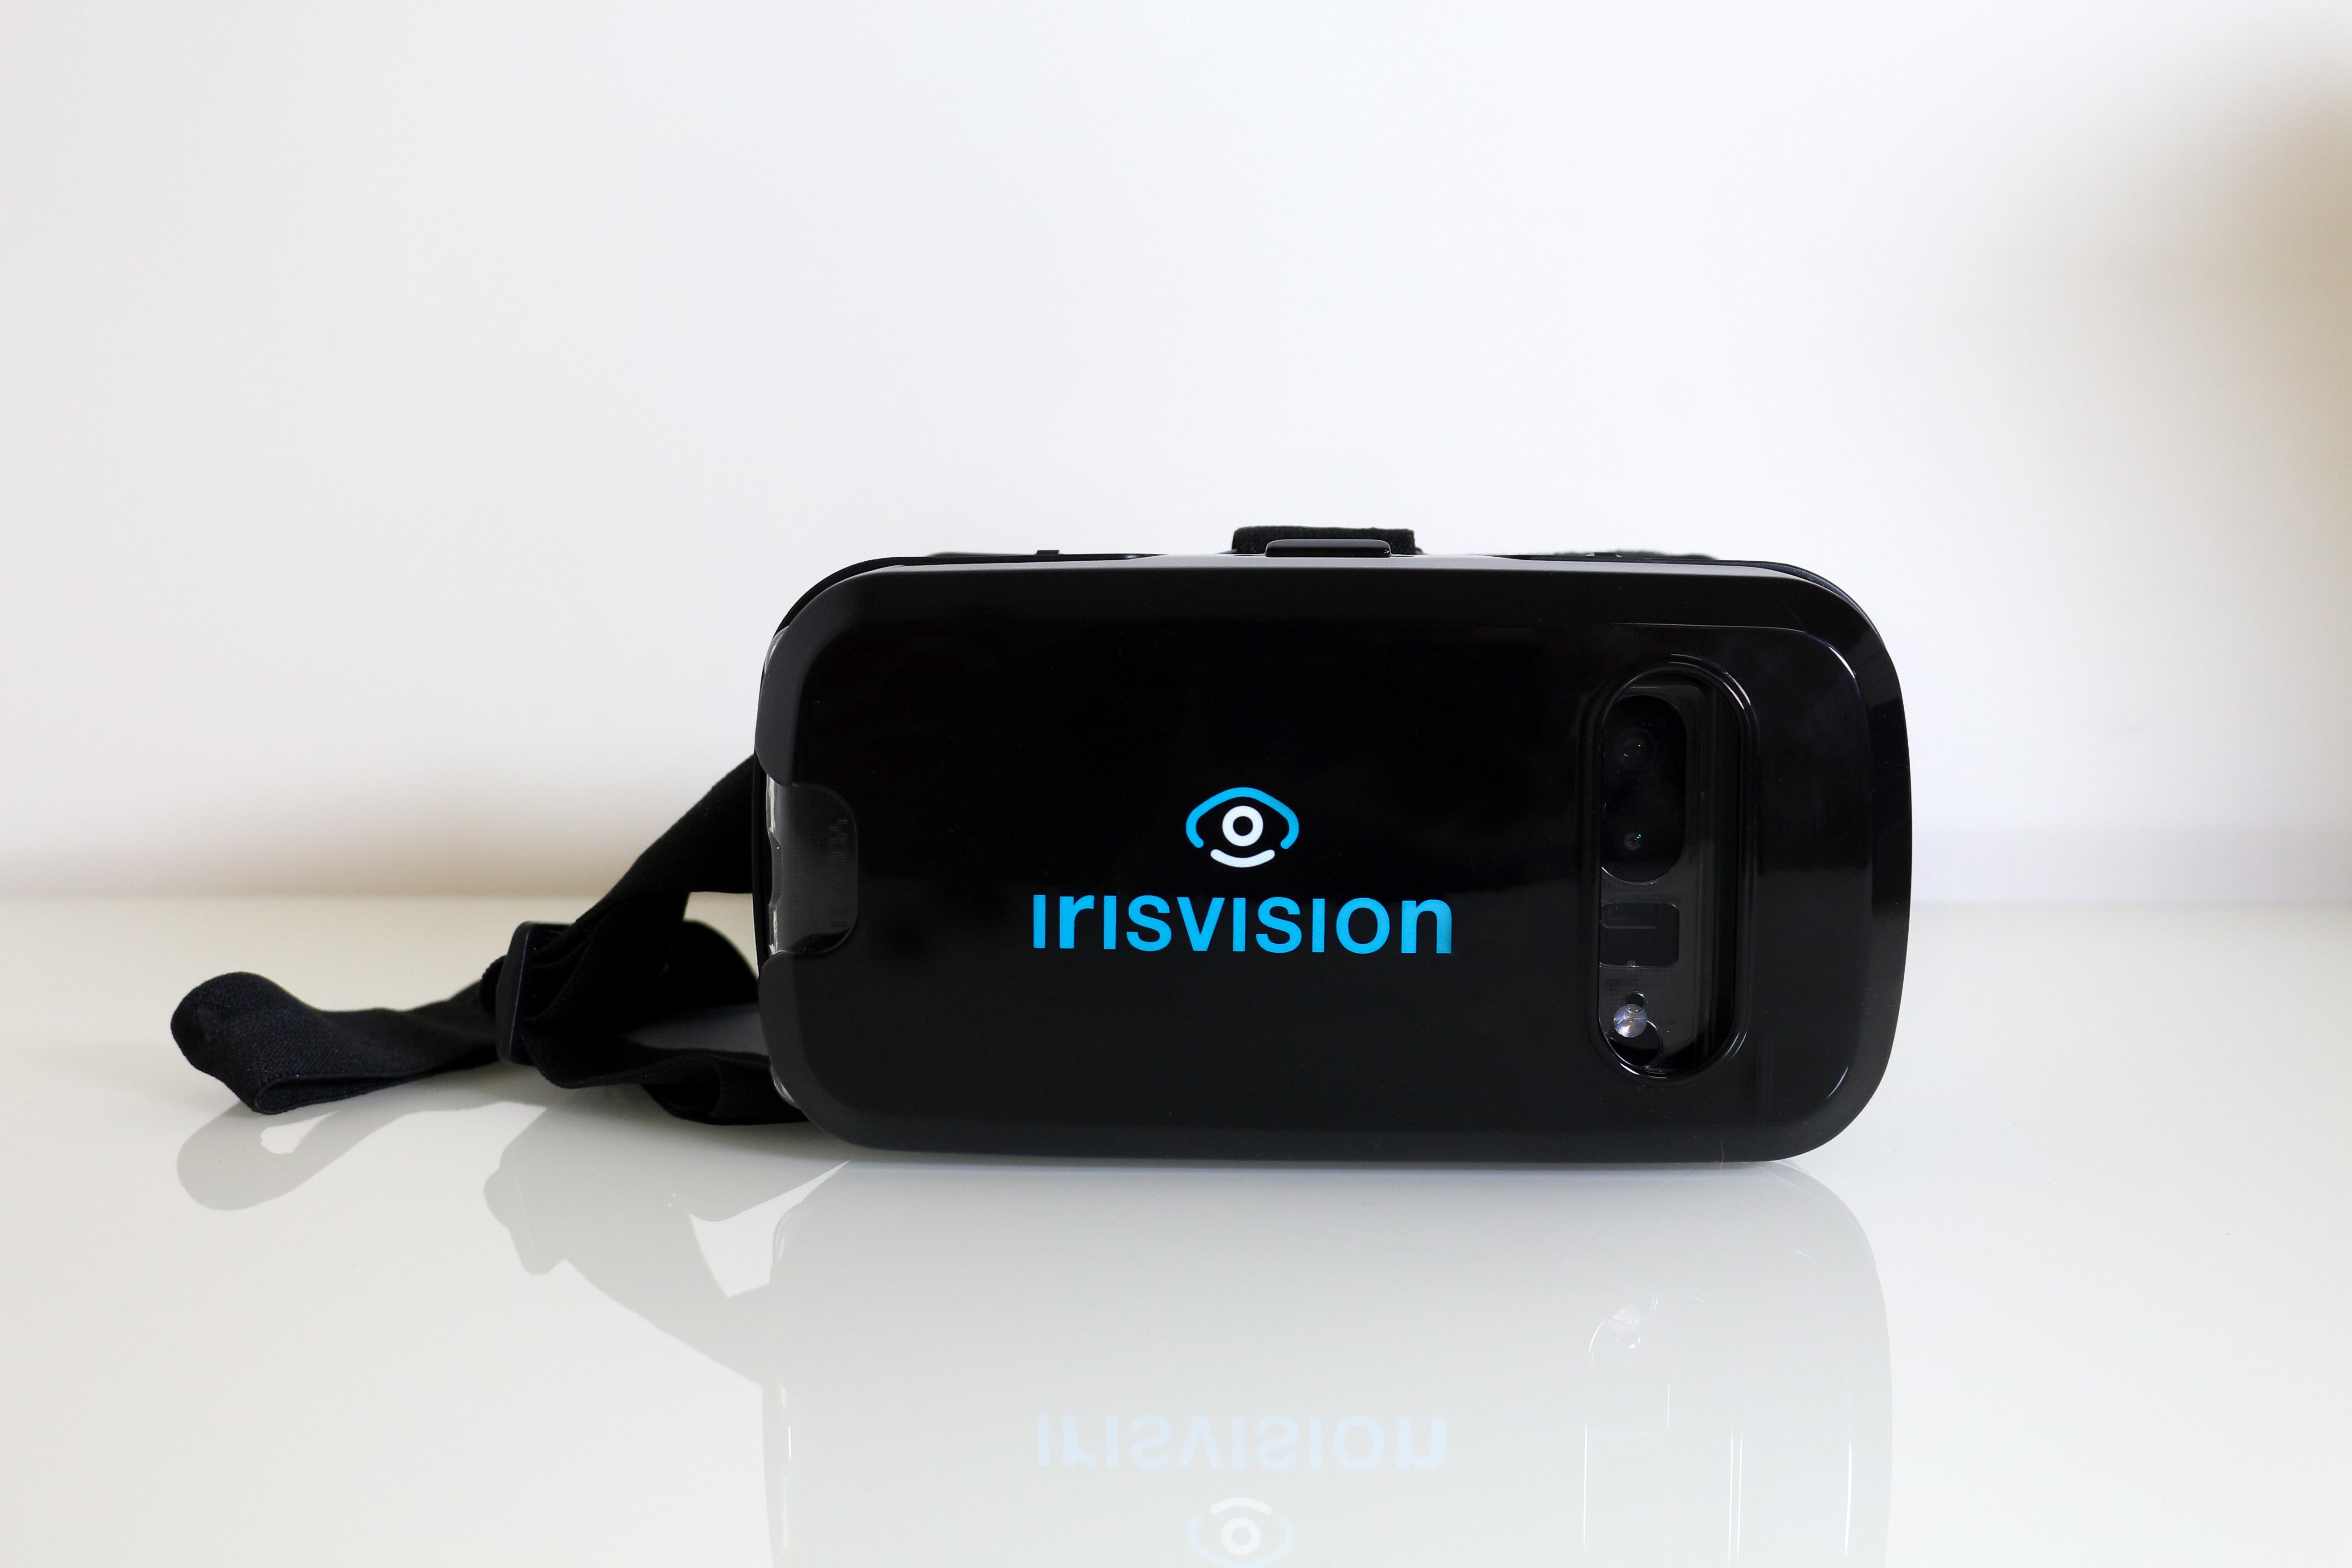 IrisVision Live 2.0